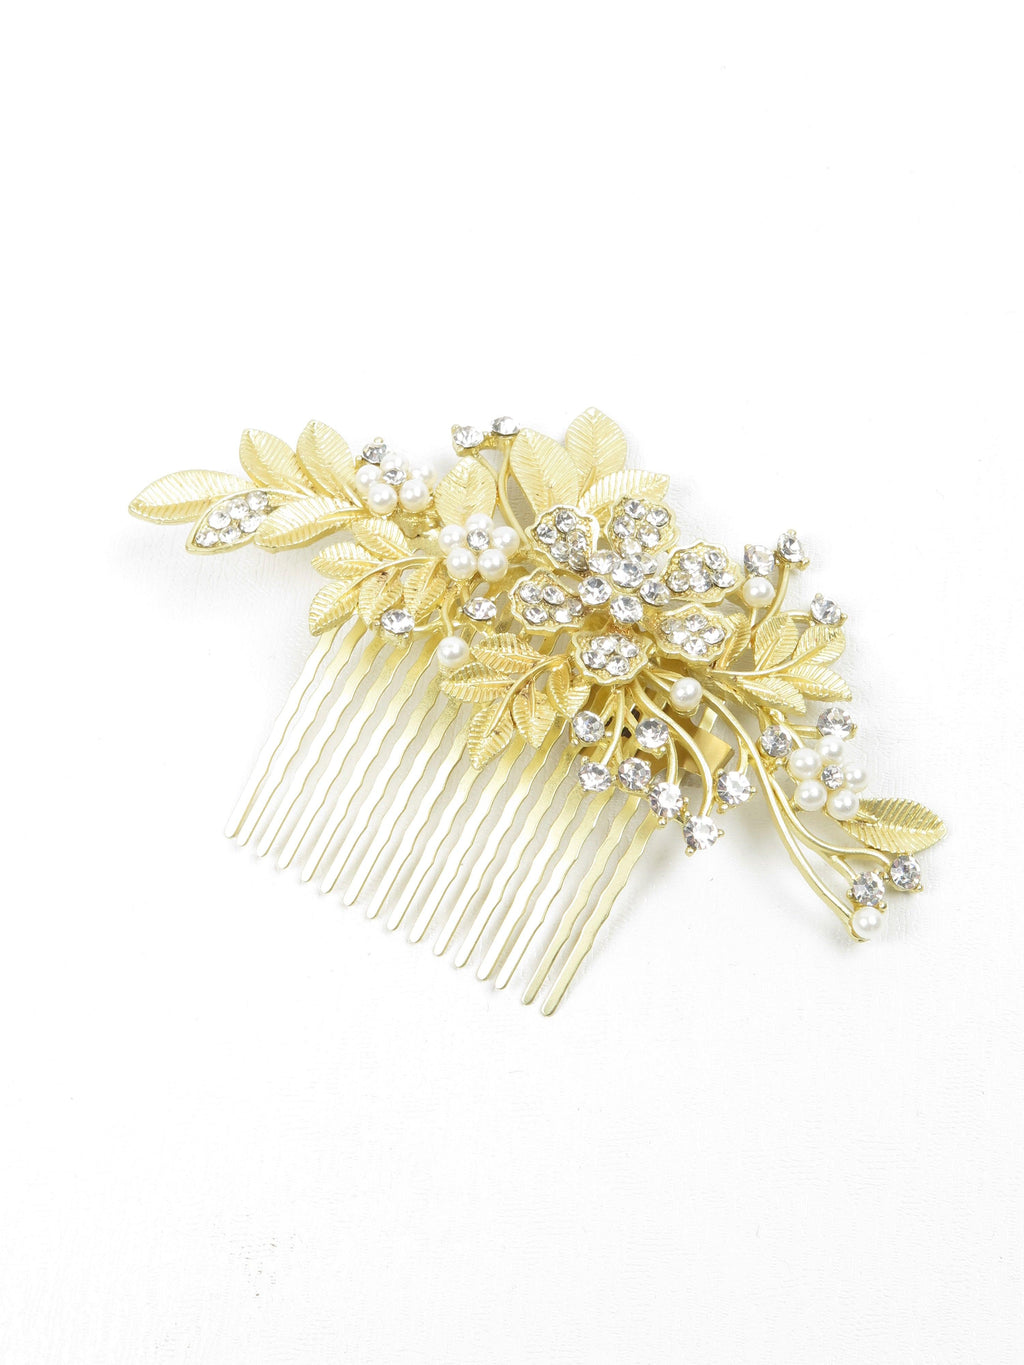 Large Gold & Diamanté Vintage Style Hair Comb - The Harlequin